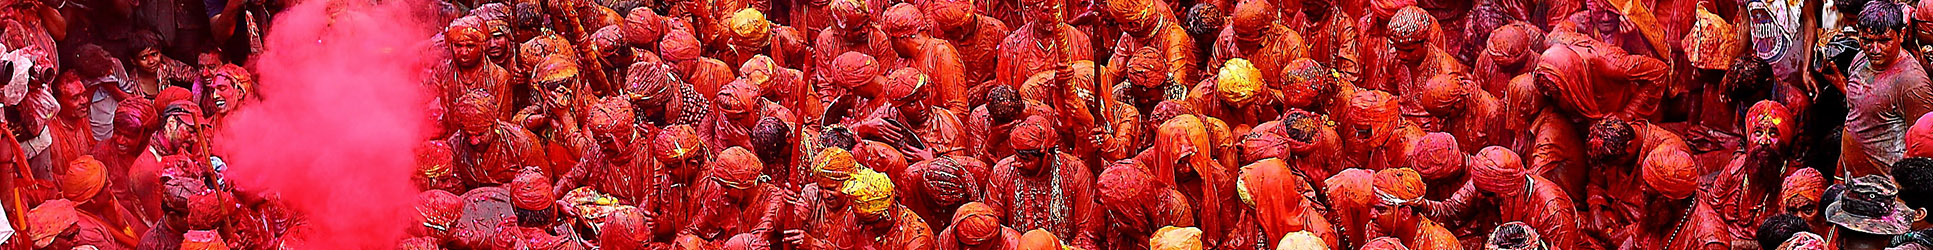 Hindu Festivals